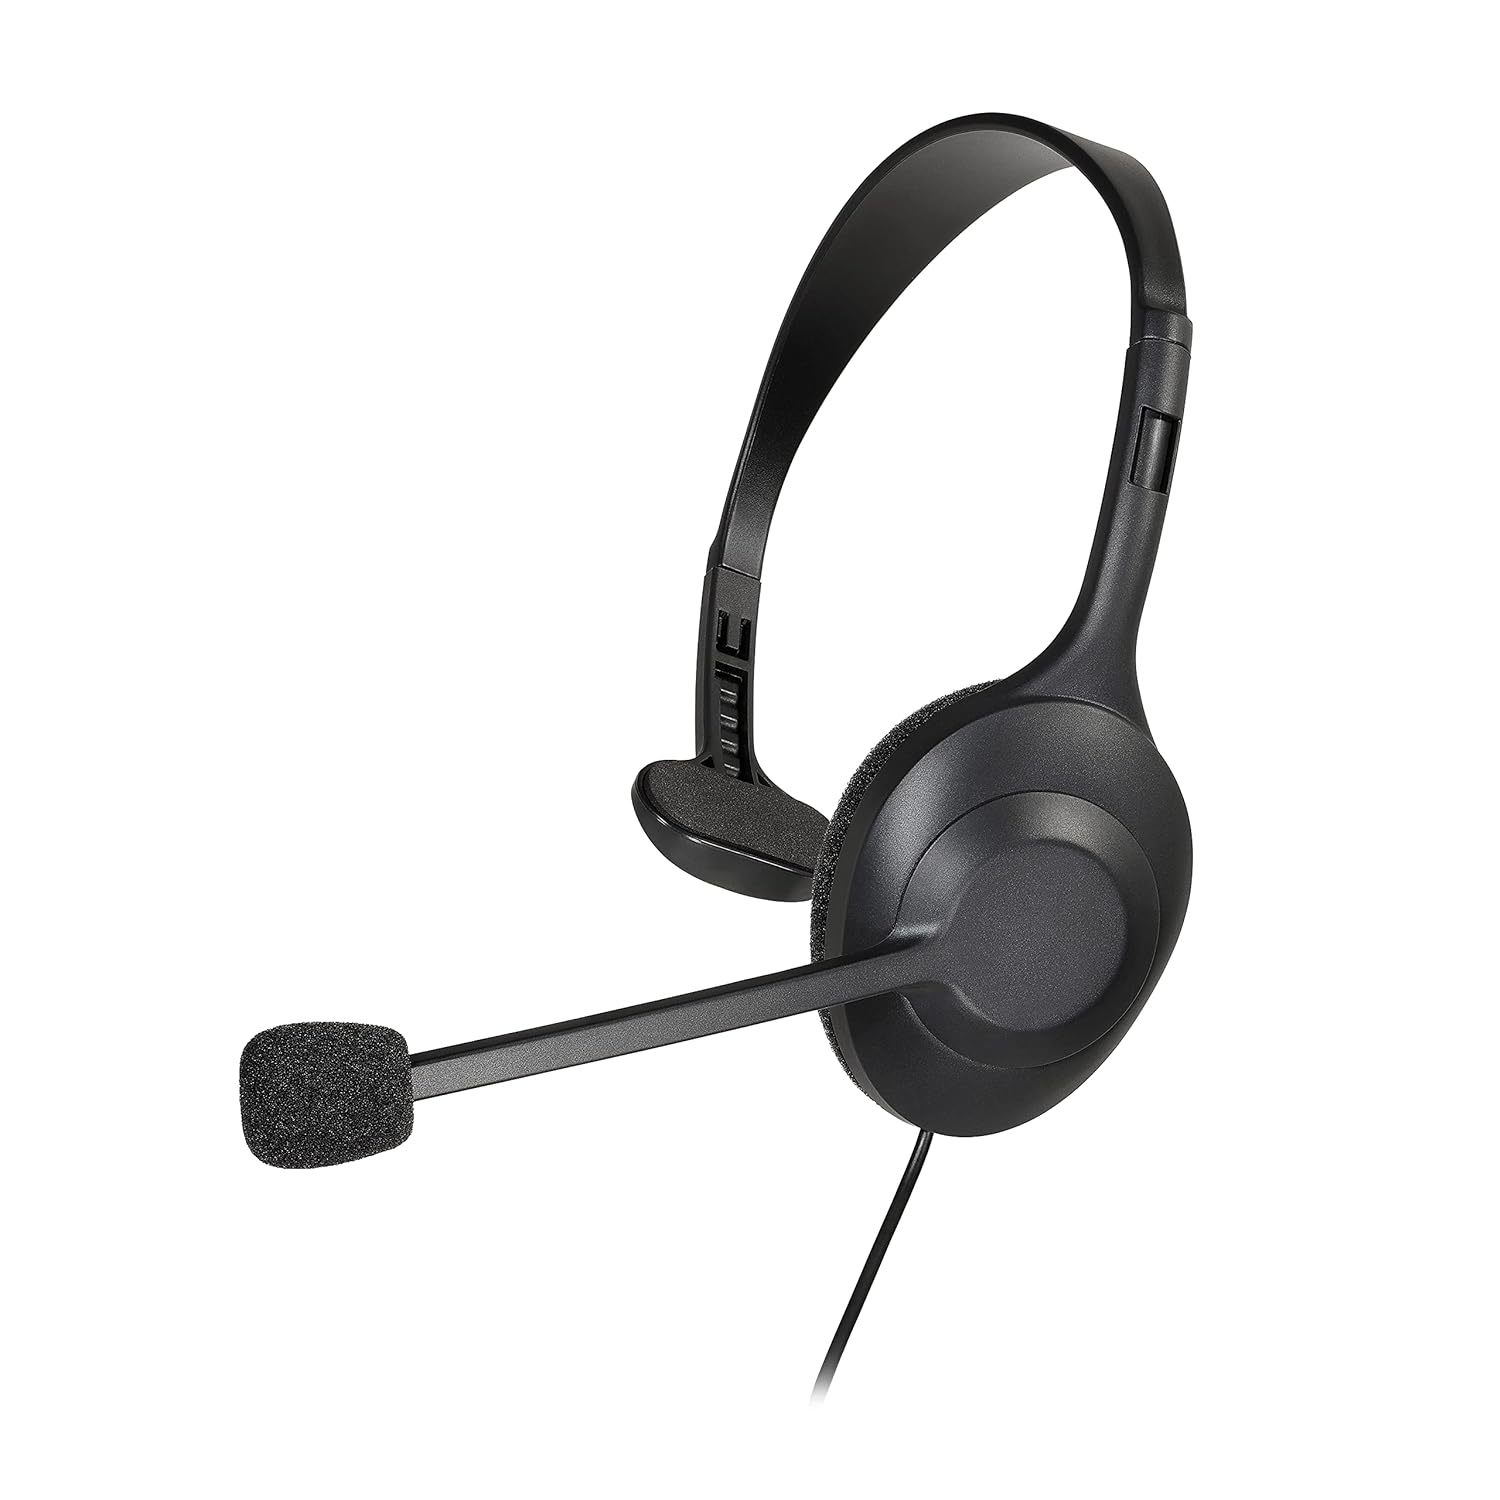 Audio-Technica ATH-101USB Single-Ear USB Headset,Black - $51.32